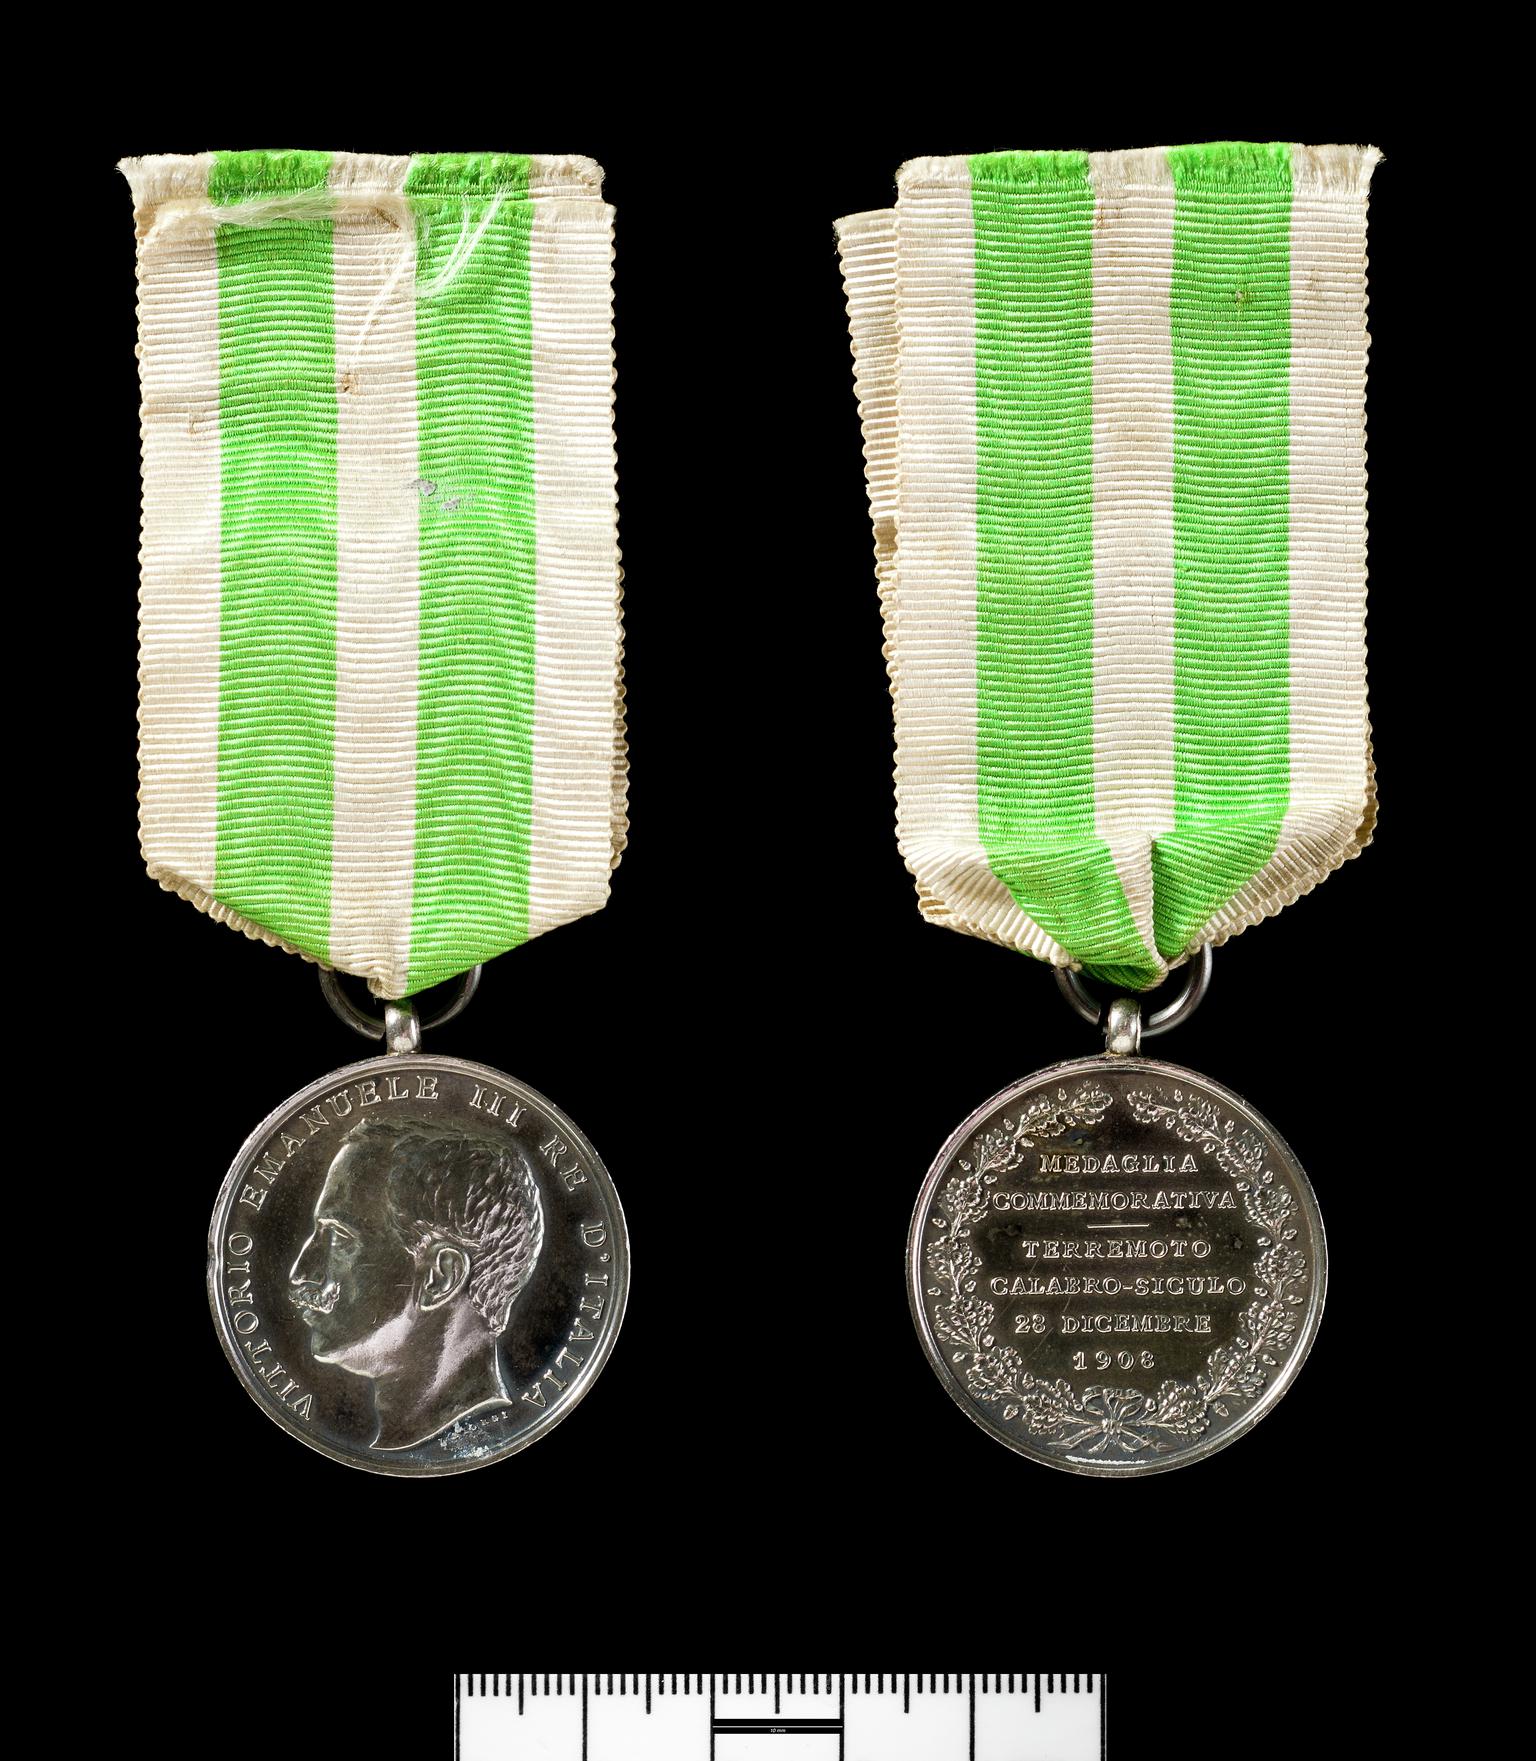 Commemorative medal